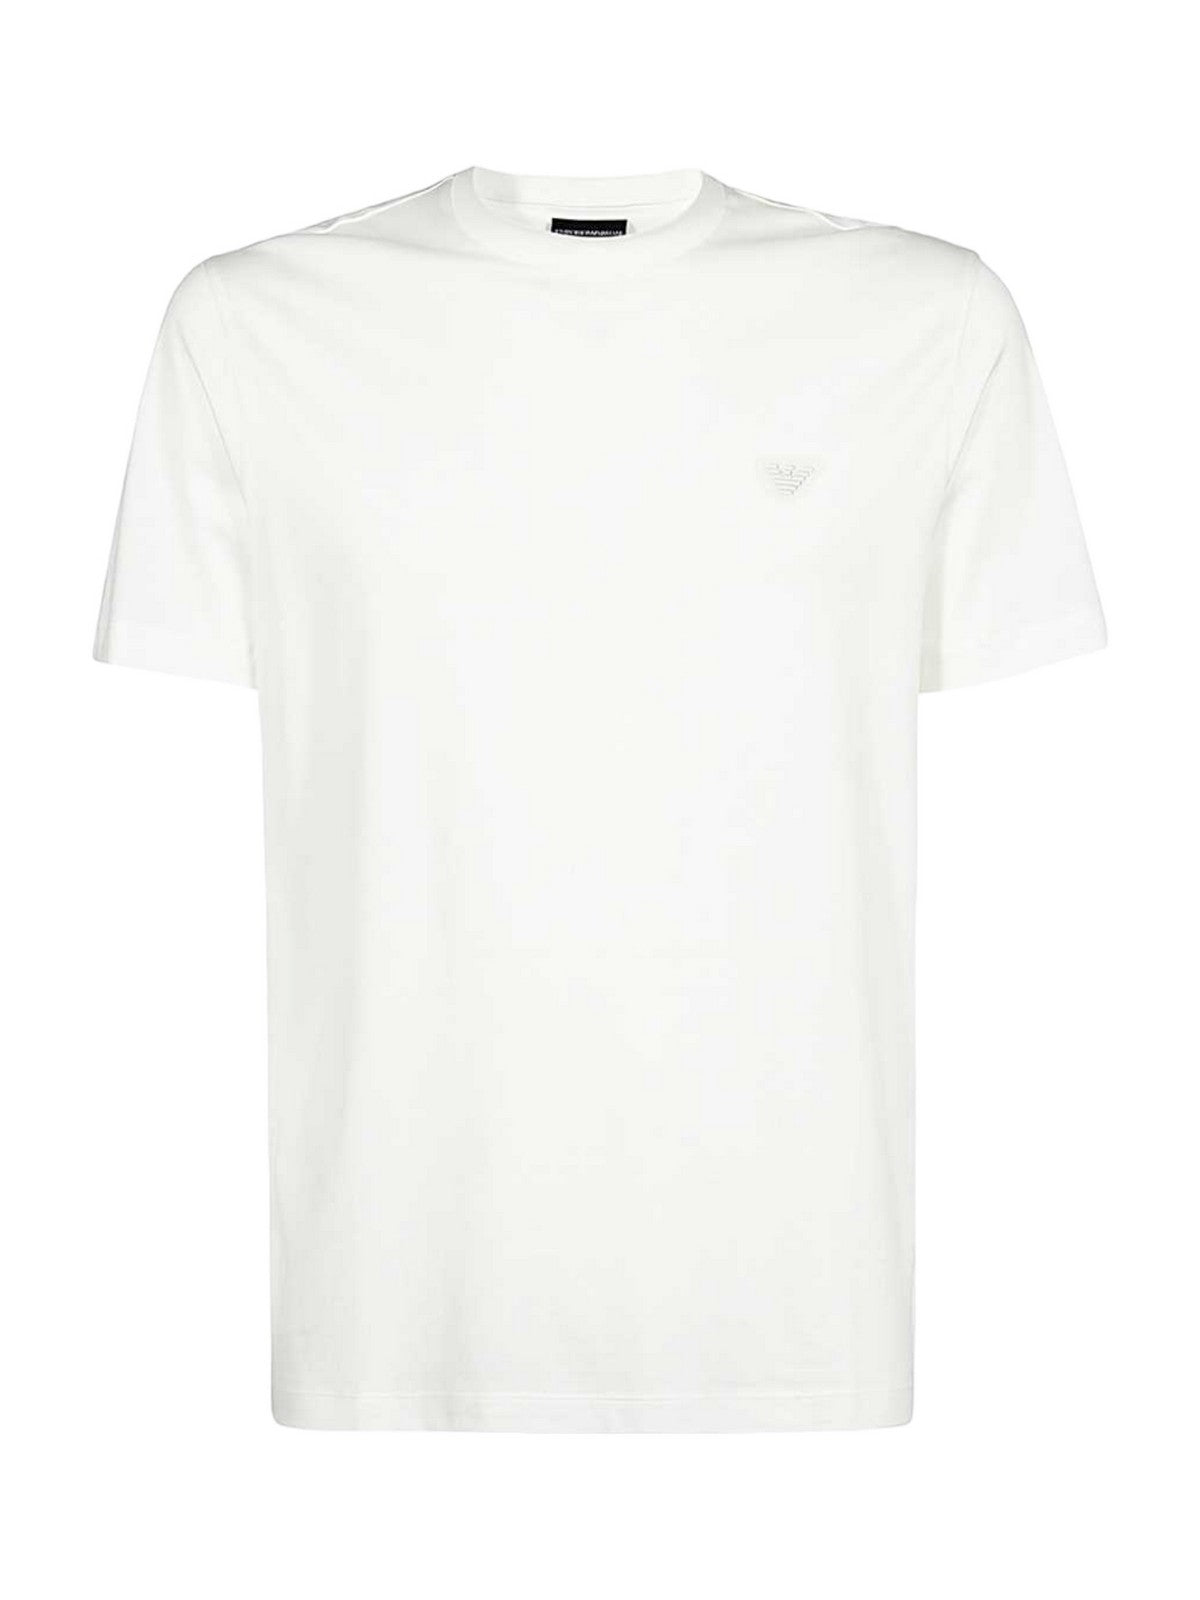 EMPORIO ARMANI T-Shirt e Polo Uomo  6R1T69 1JUVZ 0101 Bianco